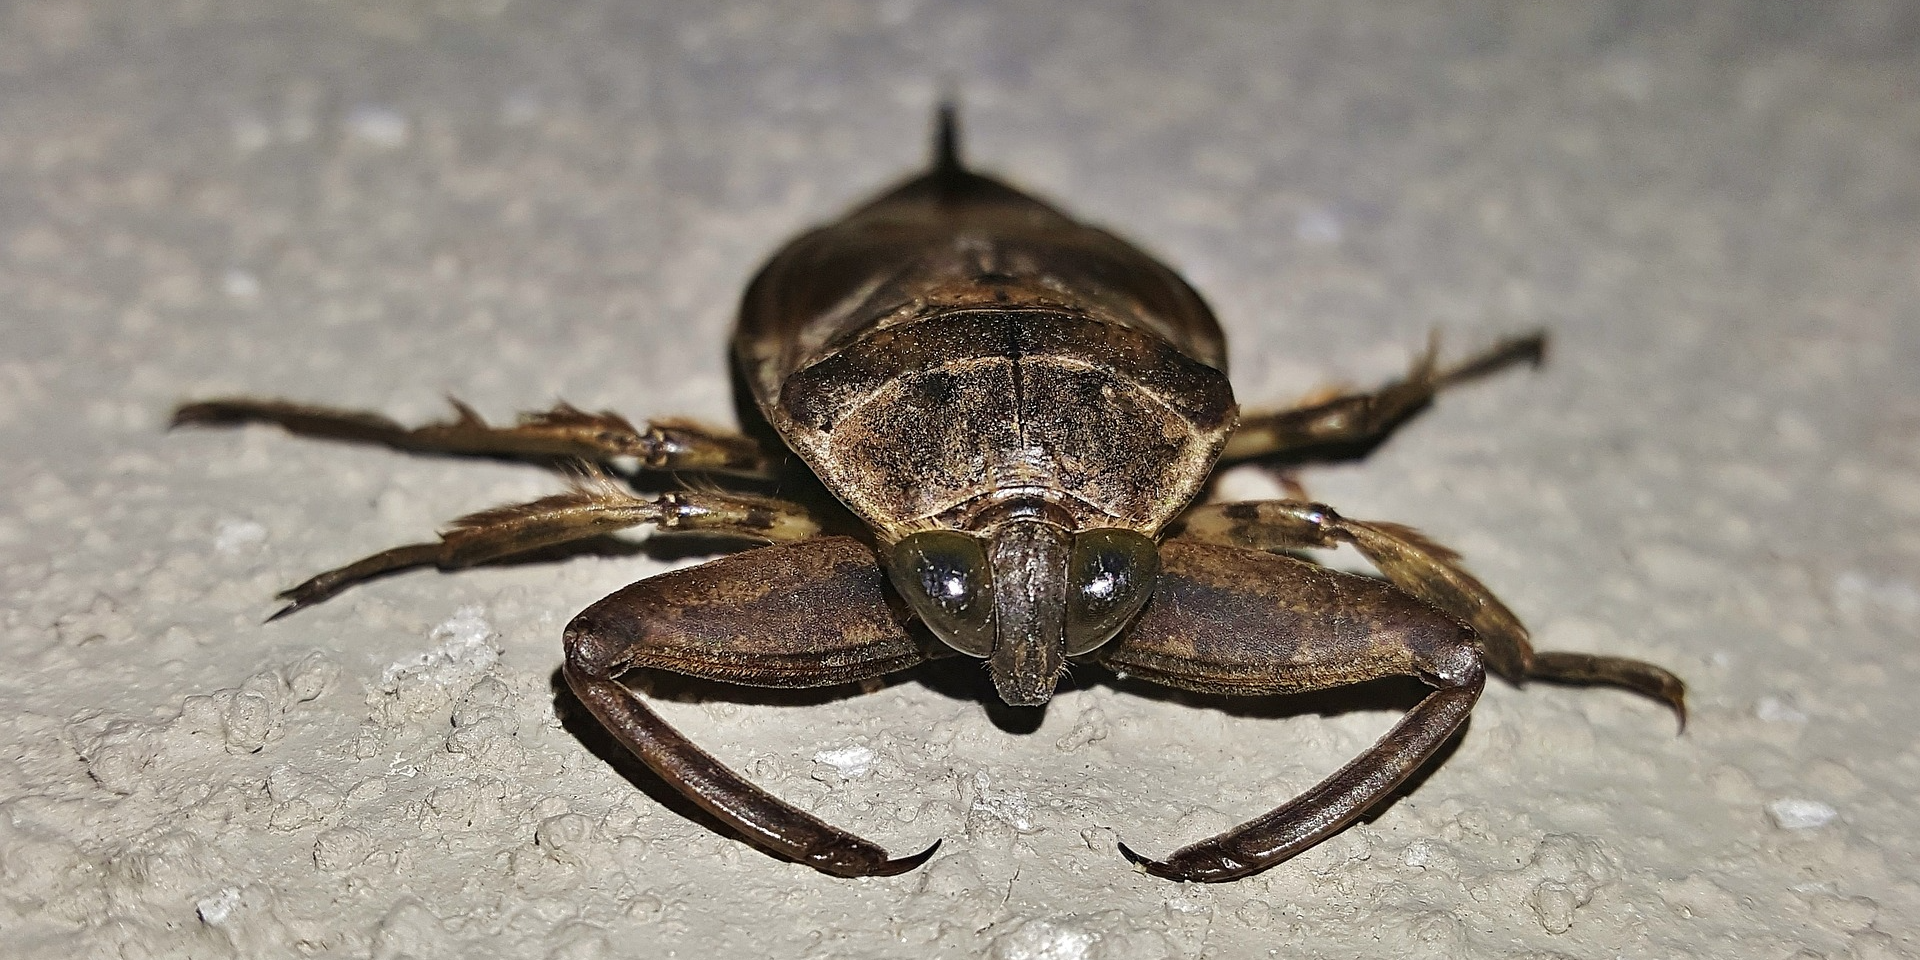 Waterbugs are large, ovoid-shaped bugs